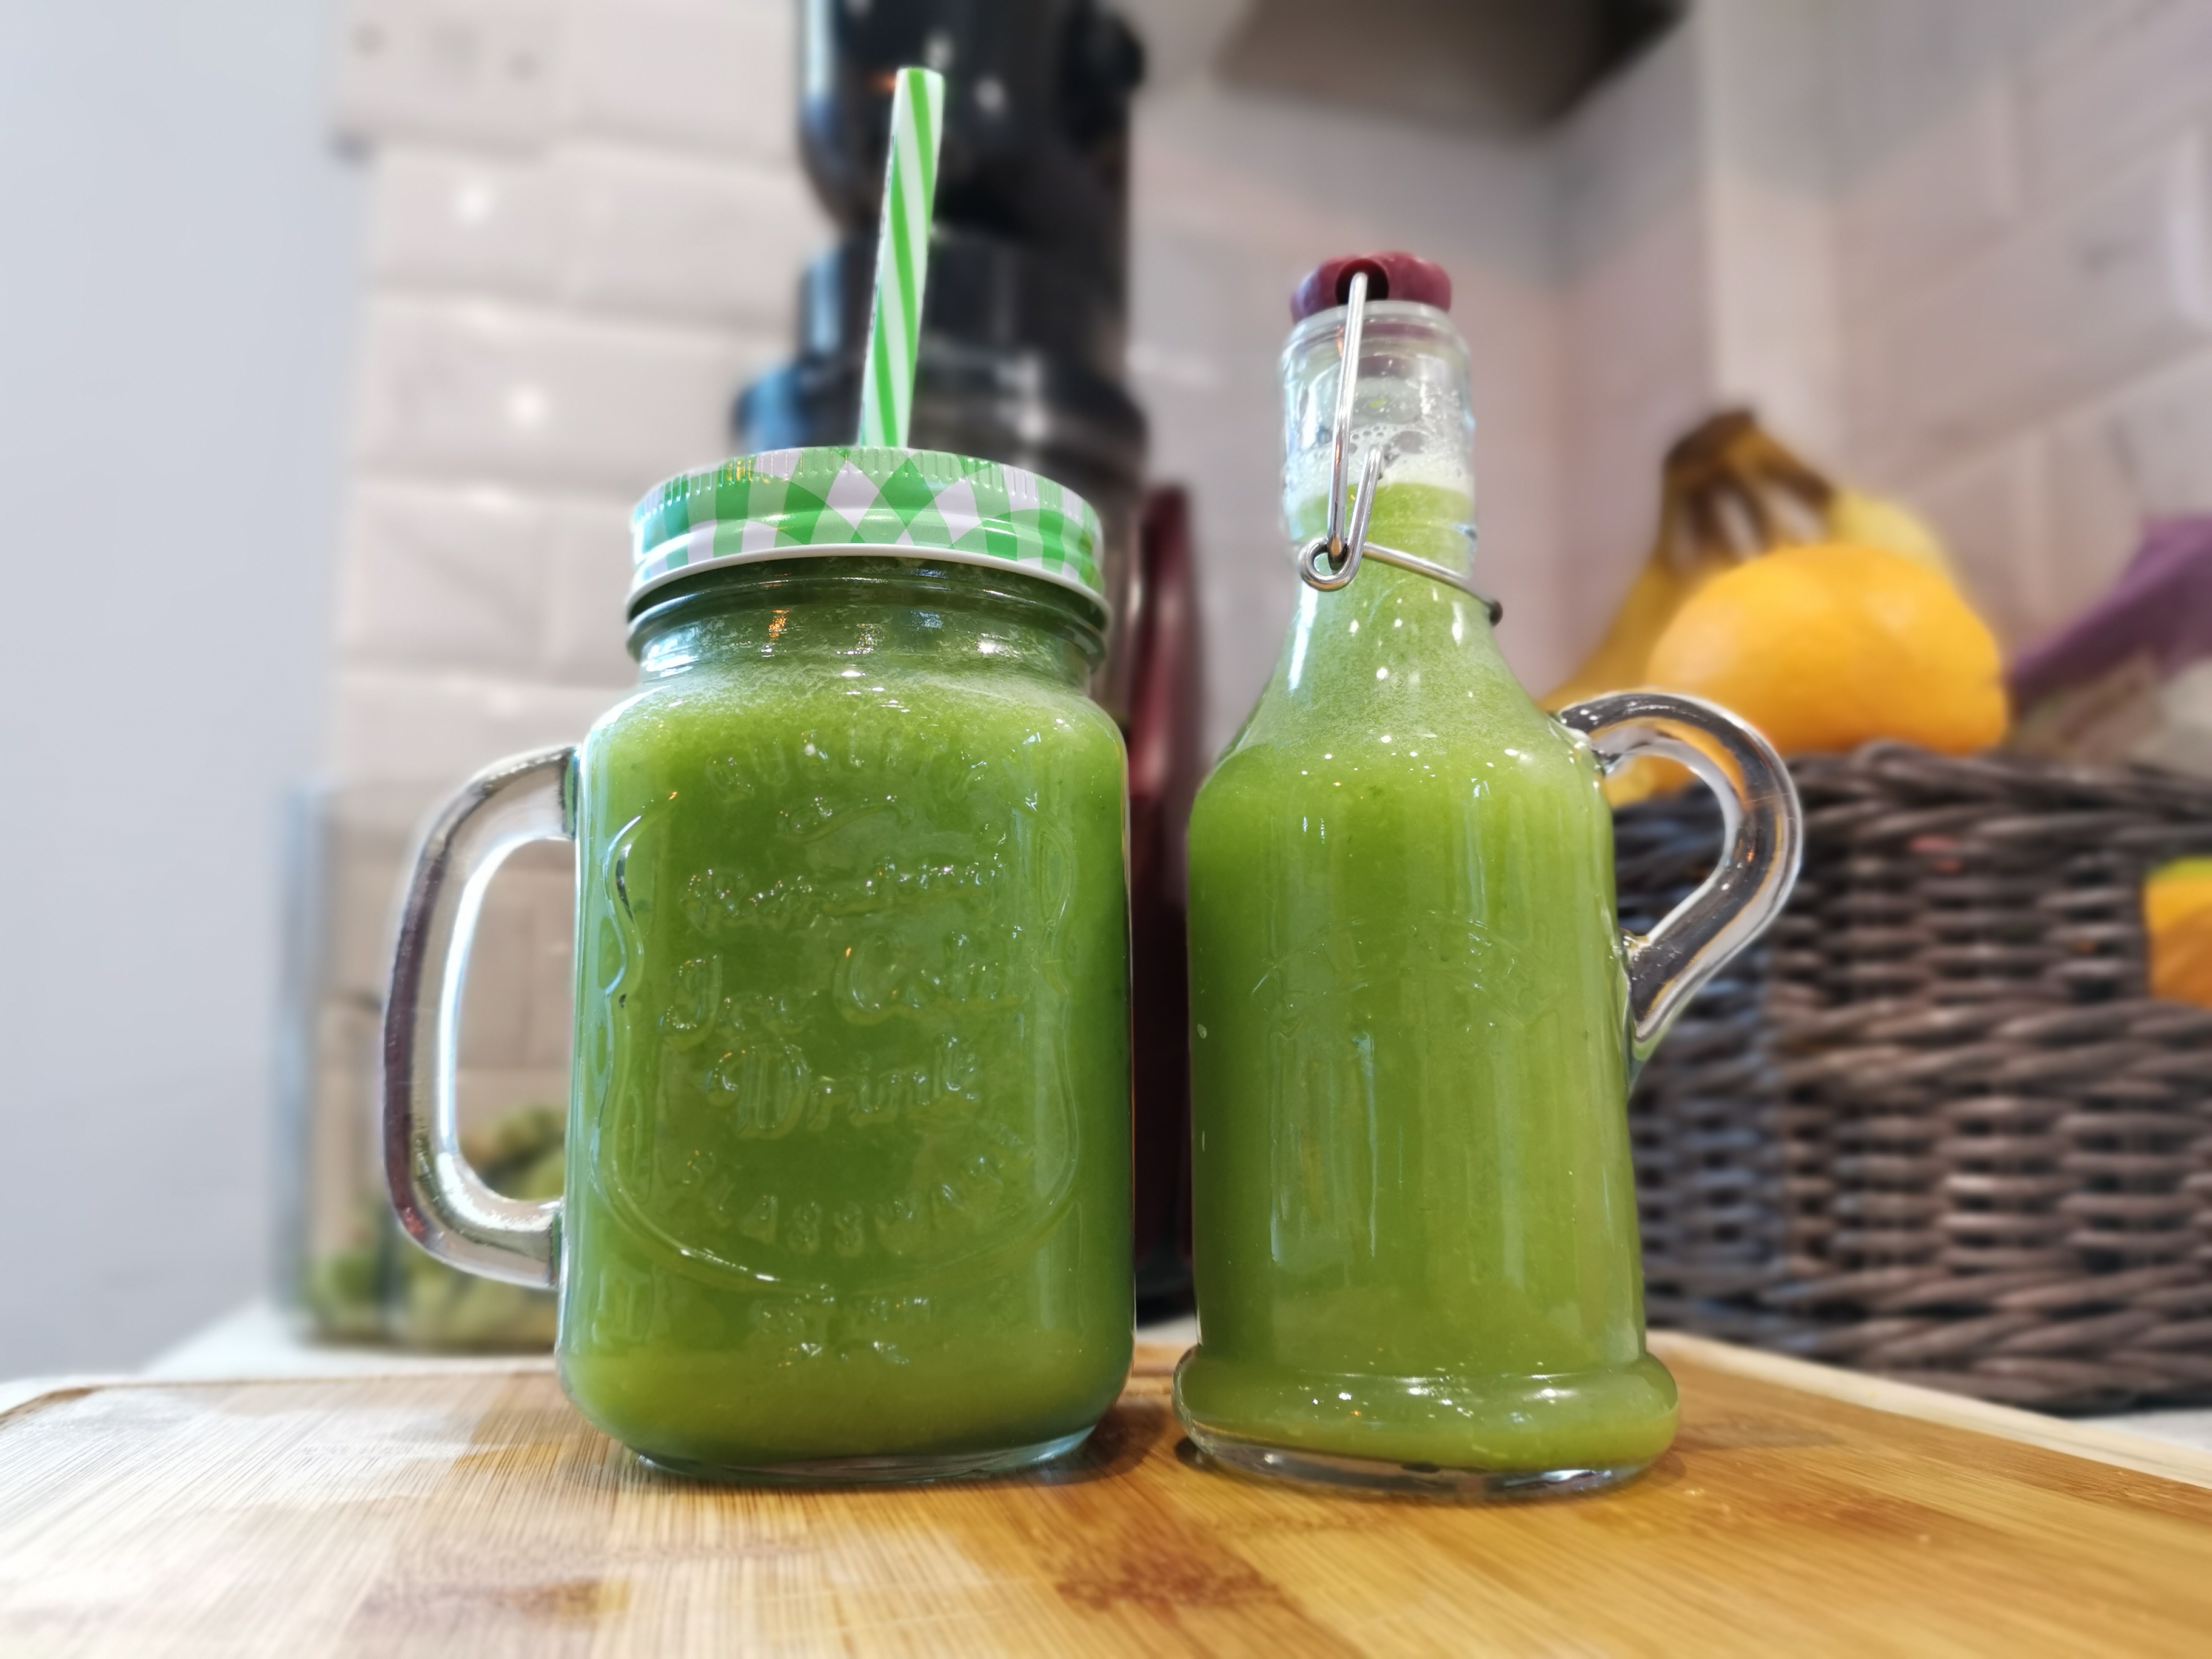 celery juice: the definitive guide - top tips, recipes